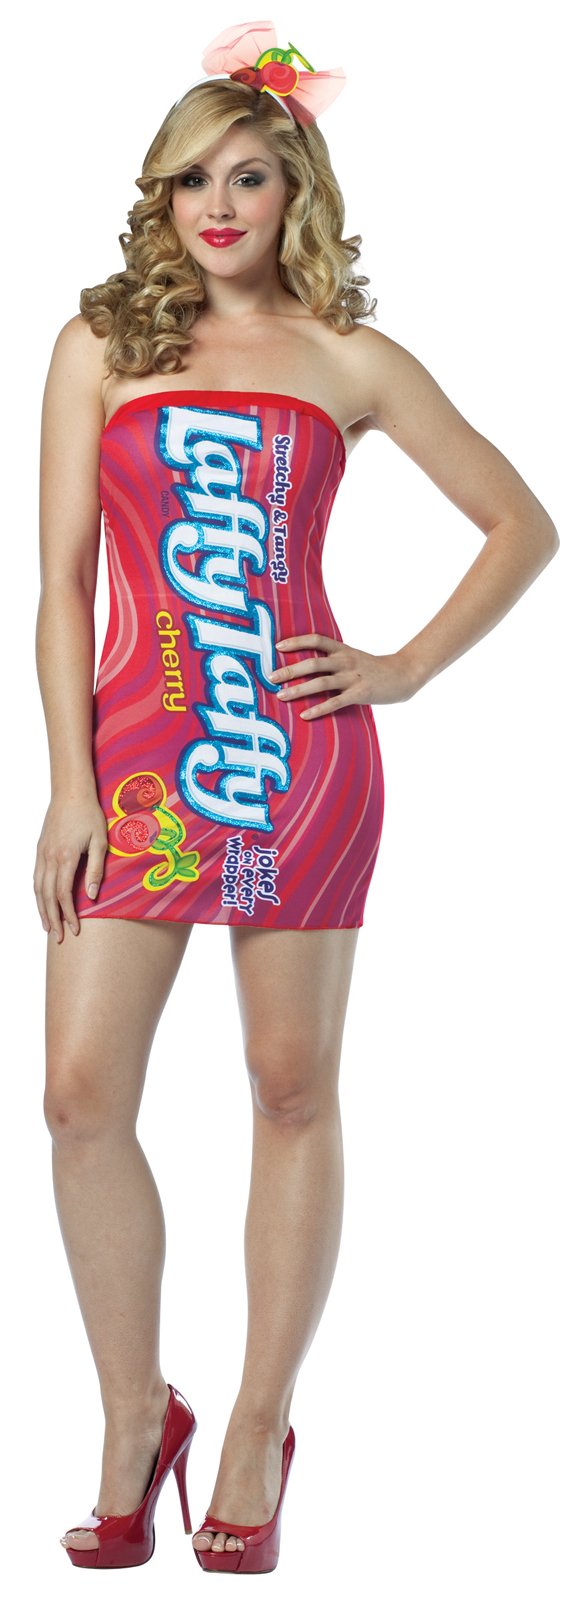 Laffy Taffy Tube Dress Adult Costume - Click Image to Close